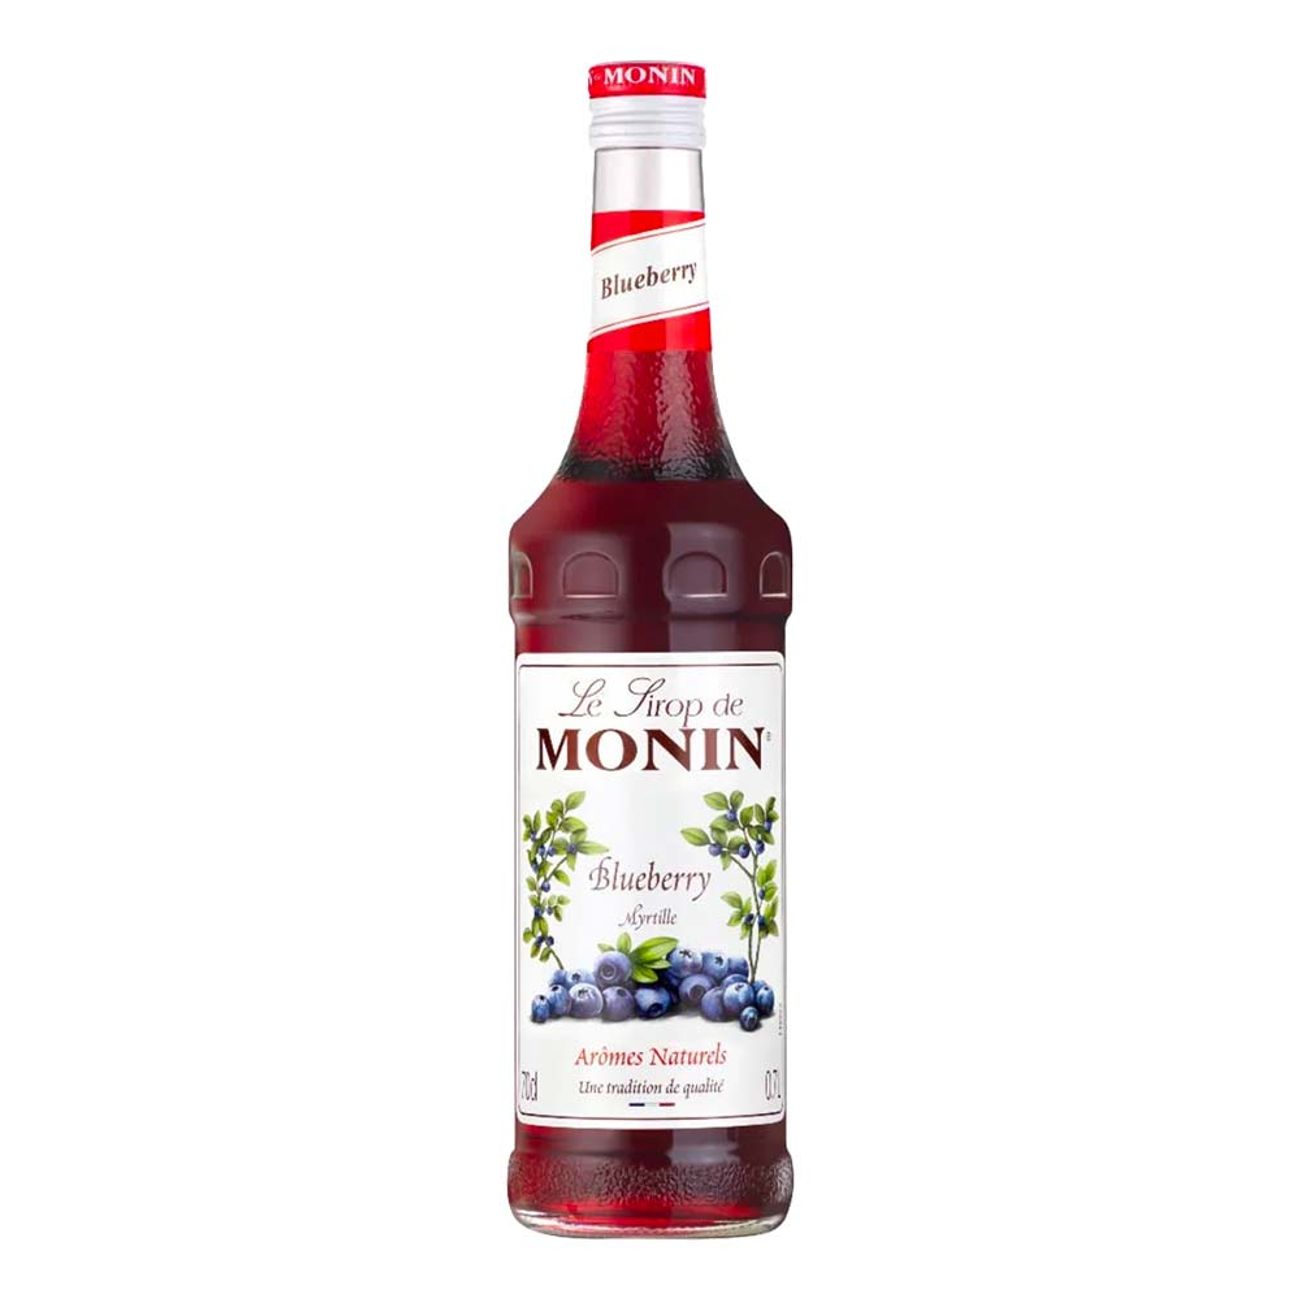 monin-blueberry-syrup-99087-1